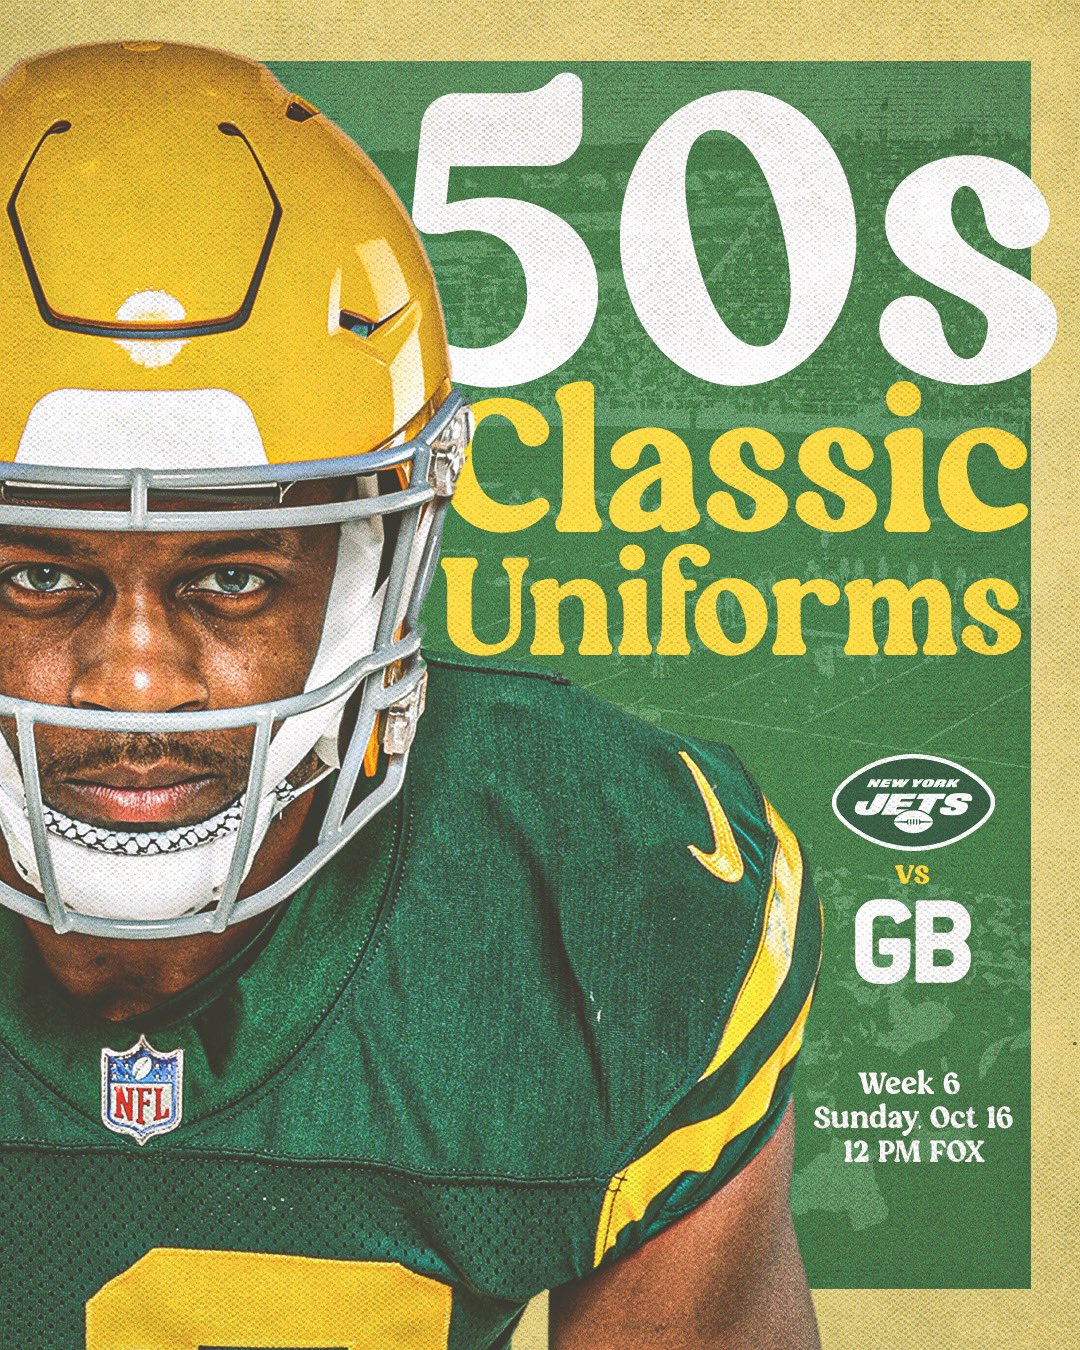 Green Bay Packers on X: '#Packers 50s Classic Uniforms return to Lambeau  Field Week 6 